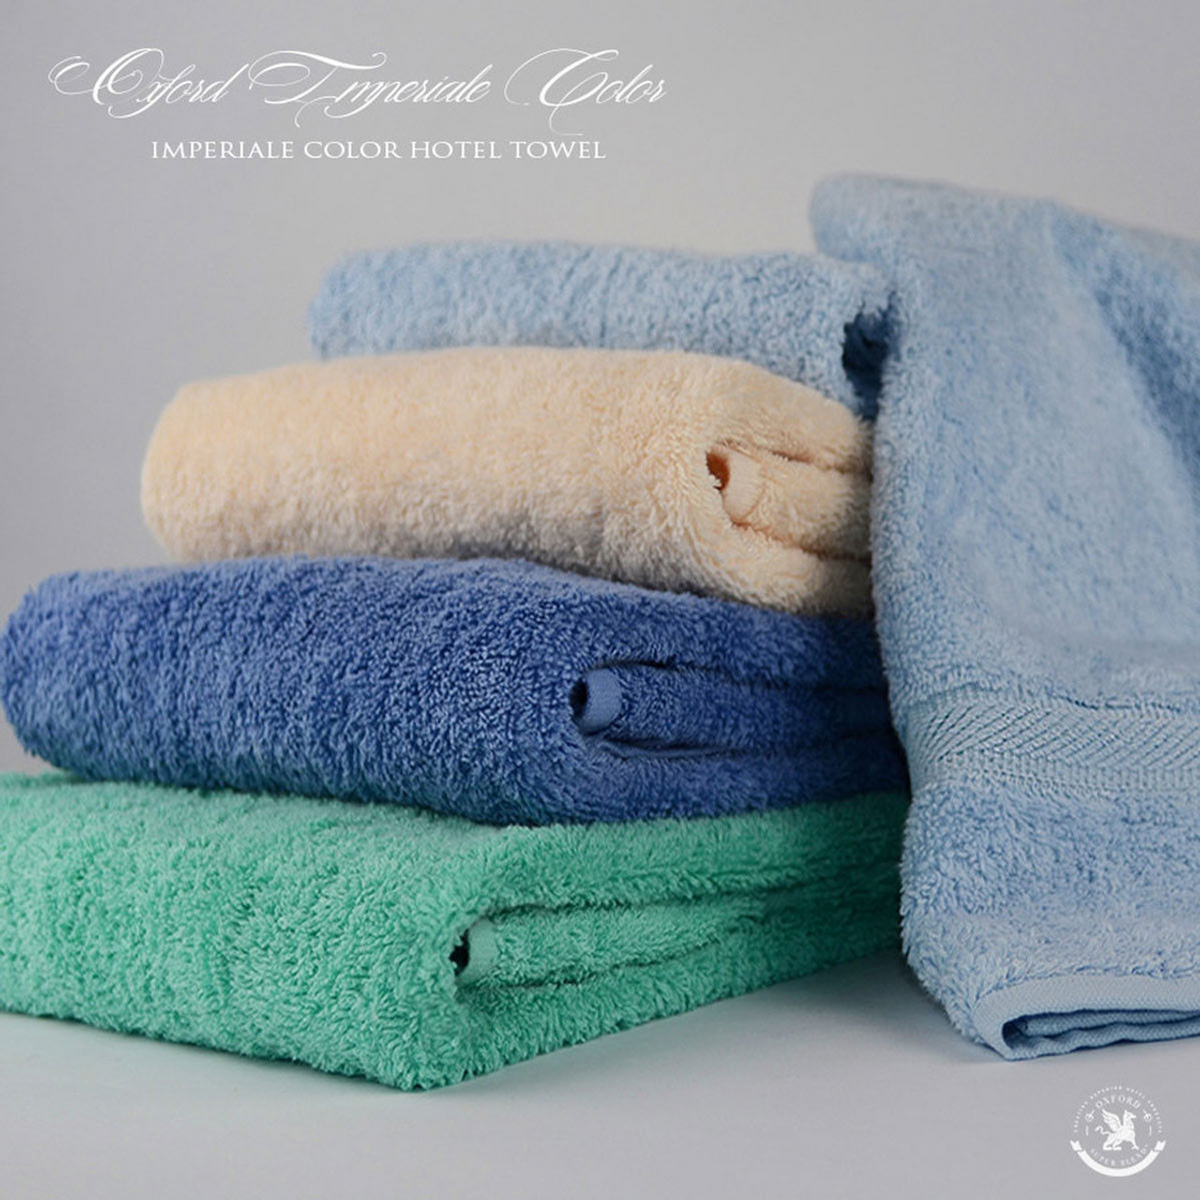 Washcloth - Oxford Imperiale Color Towel